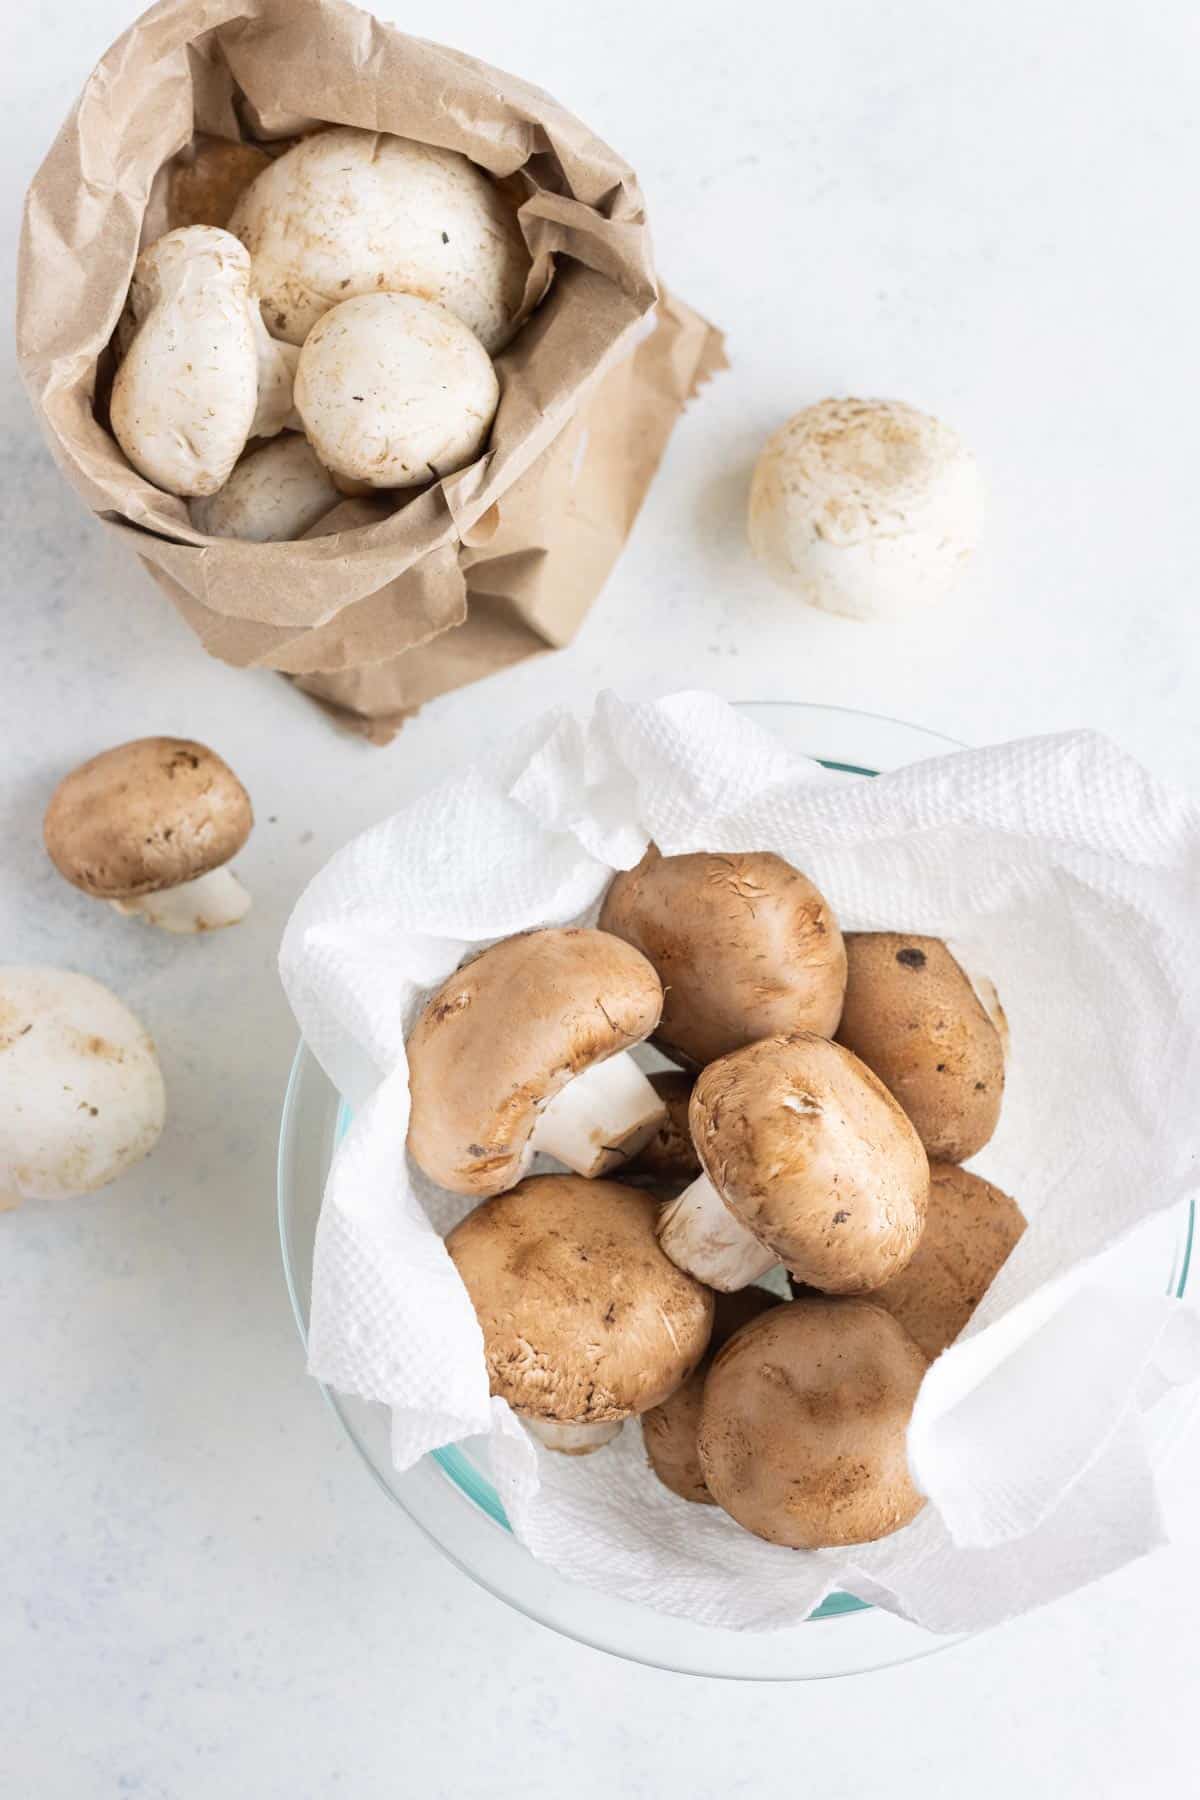 One brown paper bag full of whole mushrooms and a colander bowl of whole mushrooms with a paper towel.